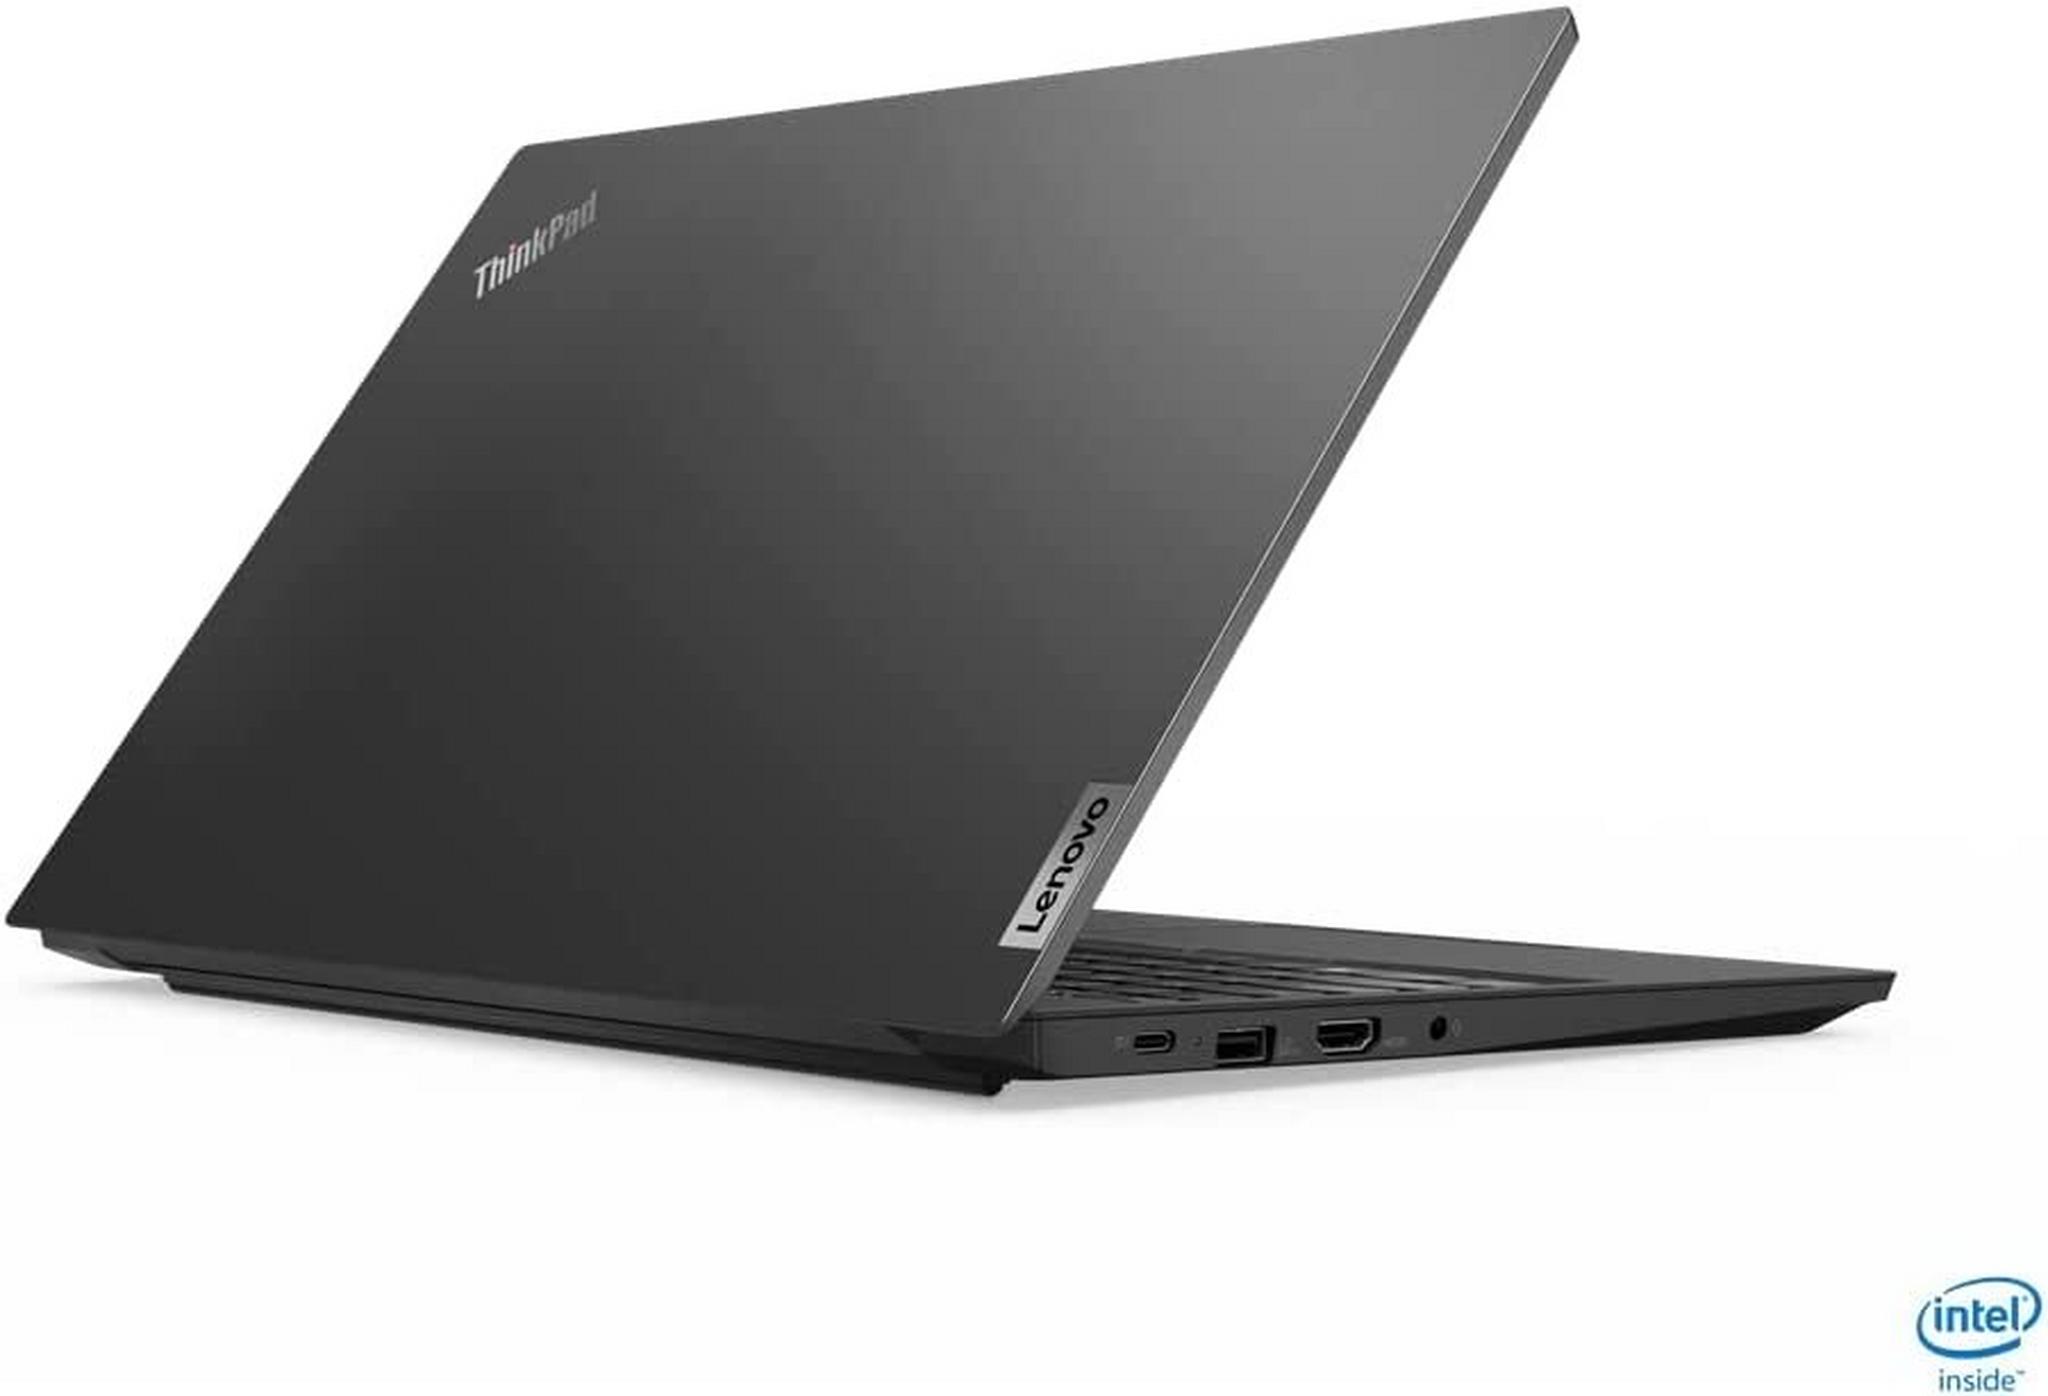 Lenovo Thinkpad E15 Gen2 -15.6" FHD - Intel Core i5 1135G7 - Integrated Intel Iris Xe Graphics - 8GB RAM - 256GB SSD - Windows 11 Pro - Laptop - Black - (20TD00EVGR)